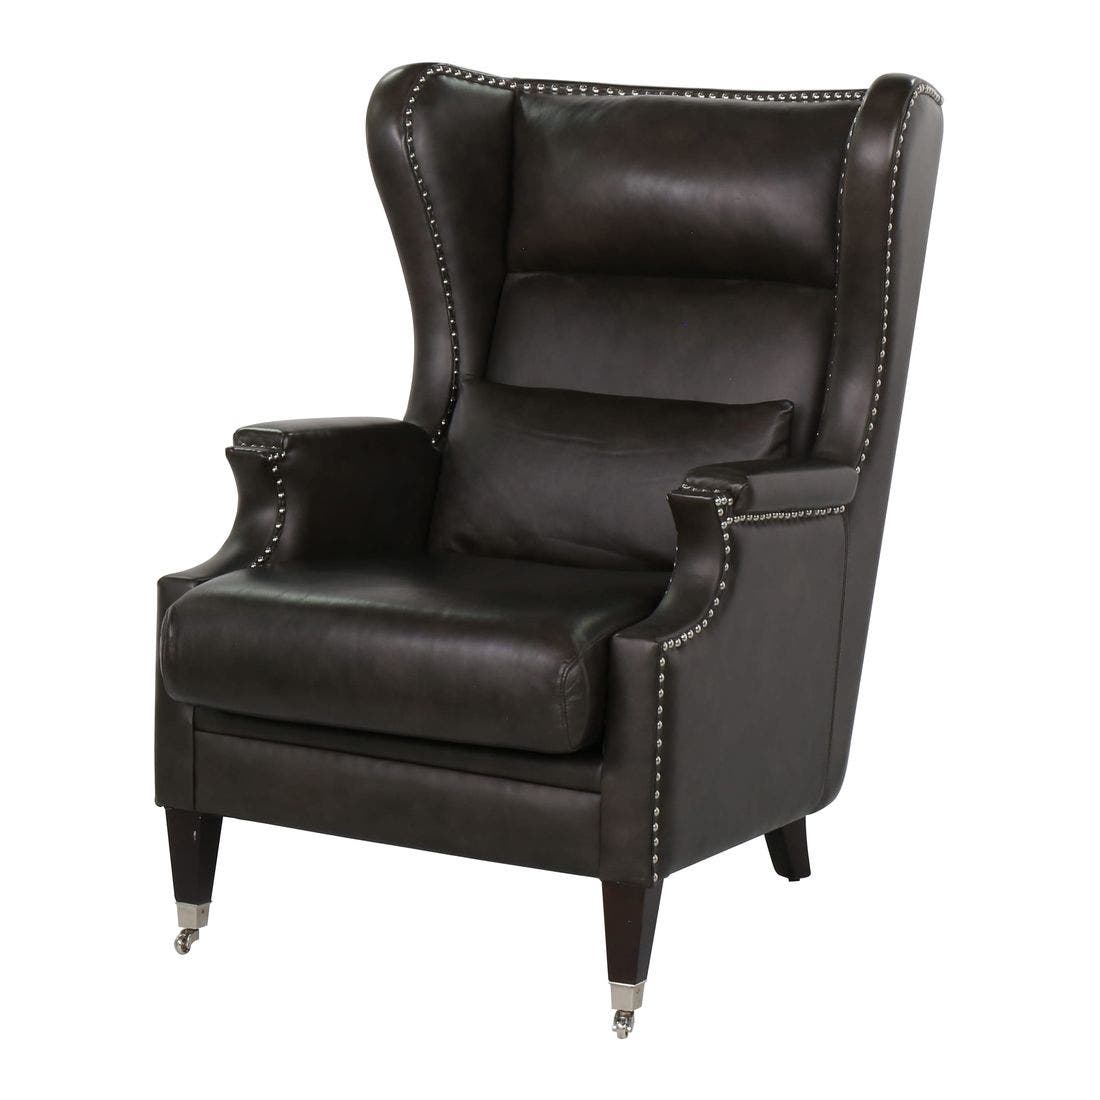 19125934-nervy-furniture-sofa-recliner-armchair-01